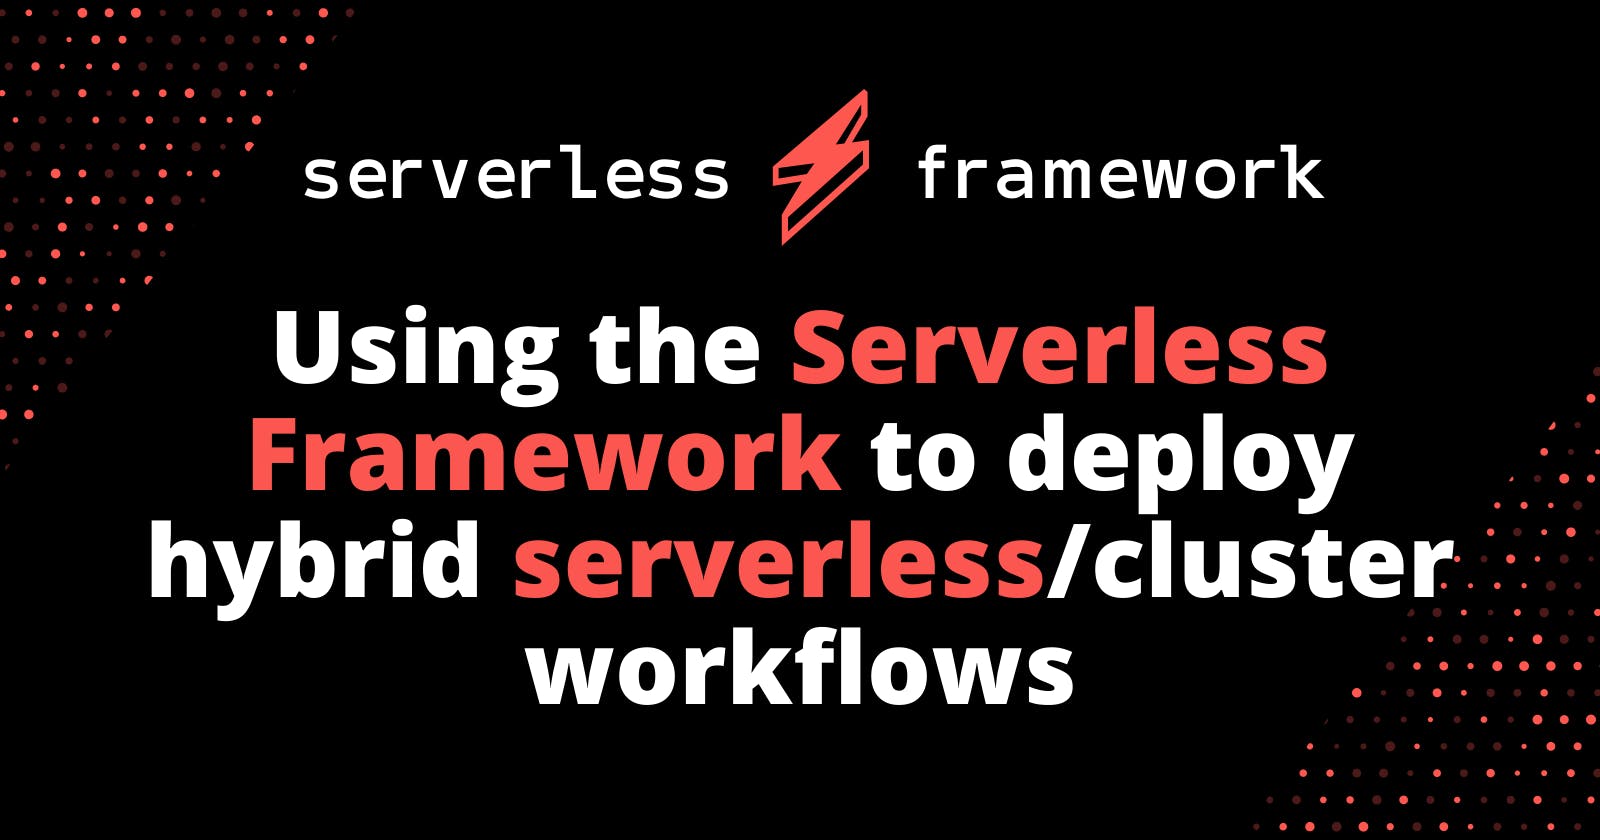 Using the Serverless framework to deploy hybrid serverless/cluster workflows